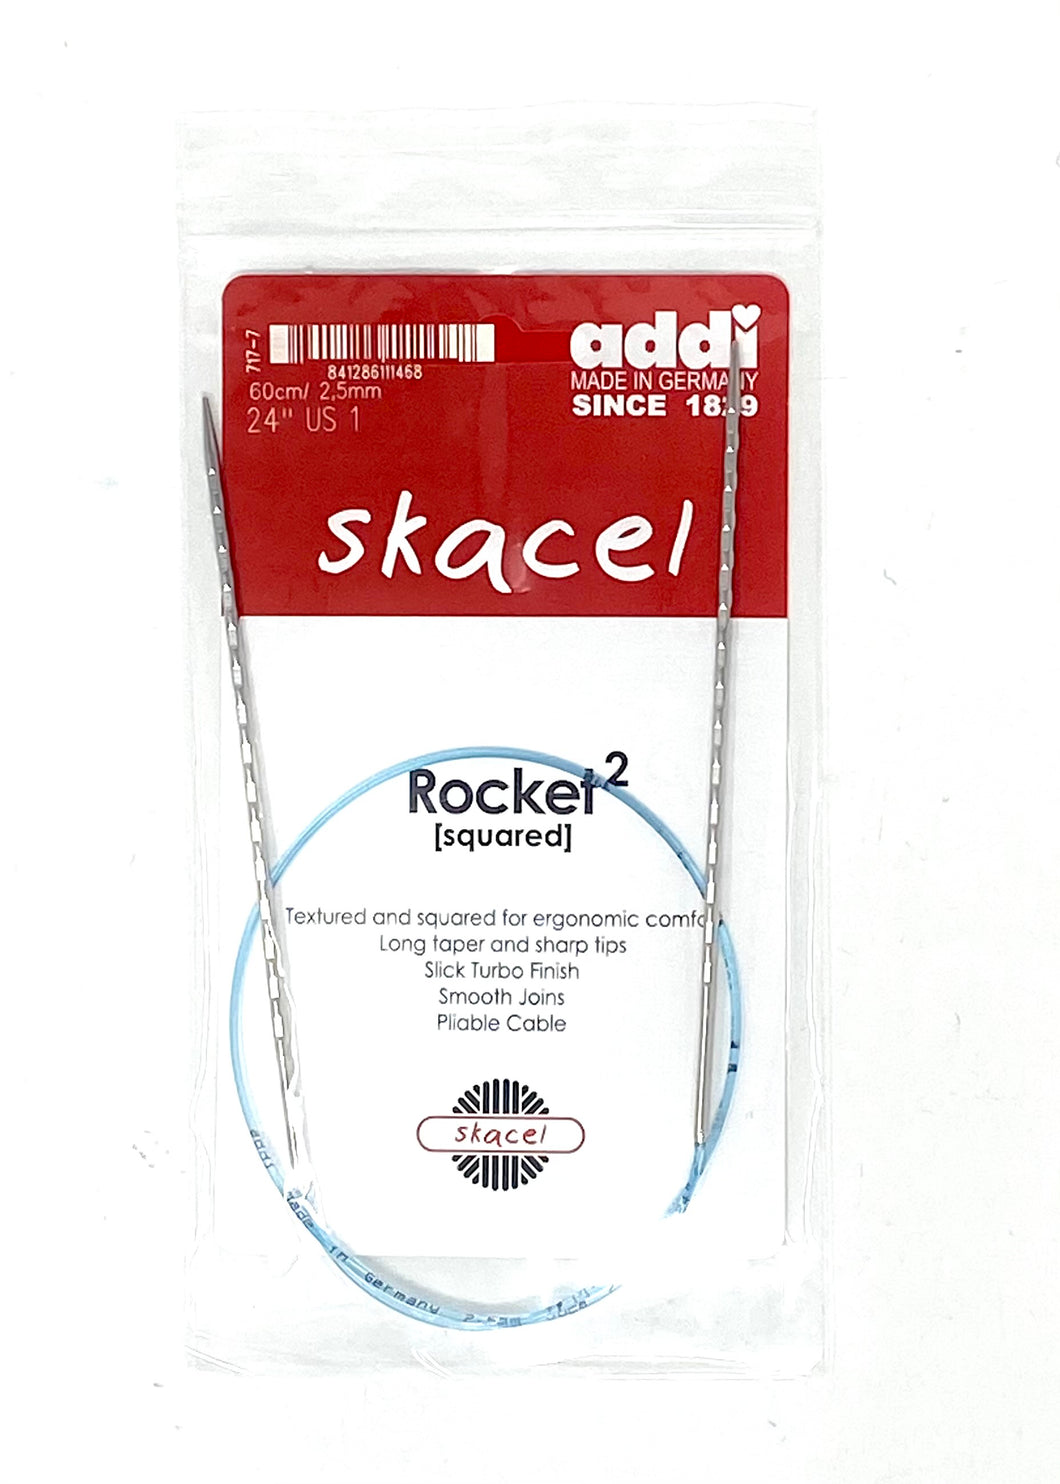 Skacel Addi Rocket Squared Needles US 1 - 24”